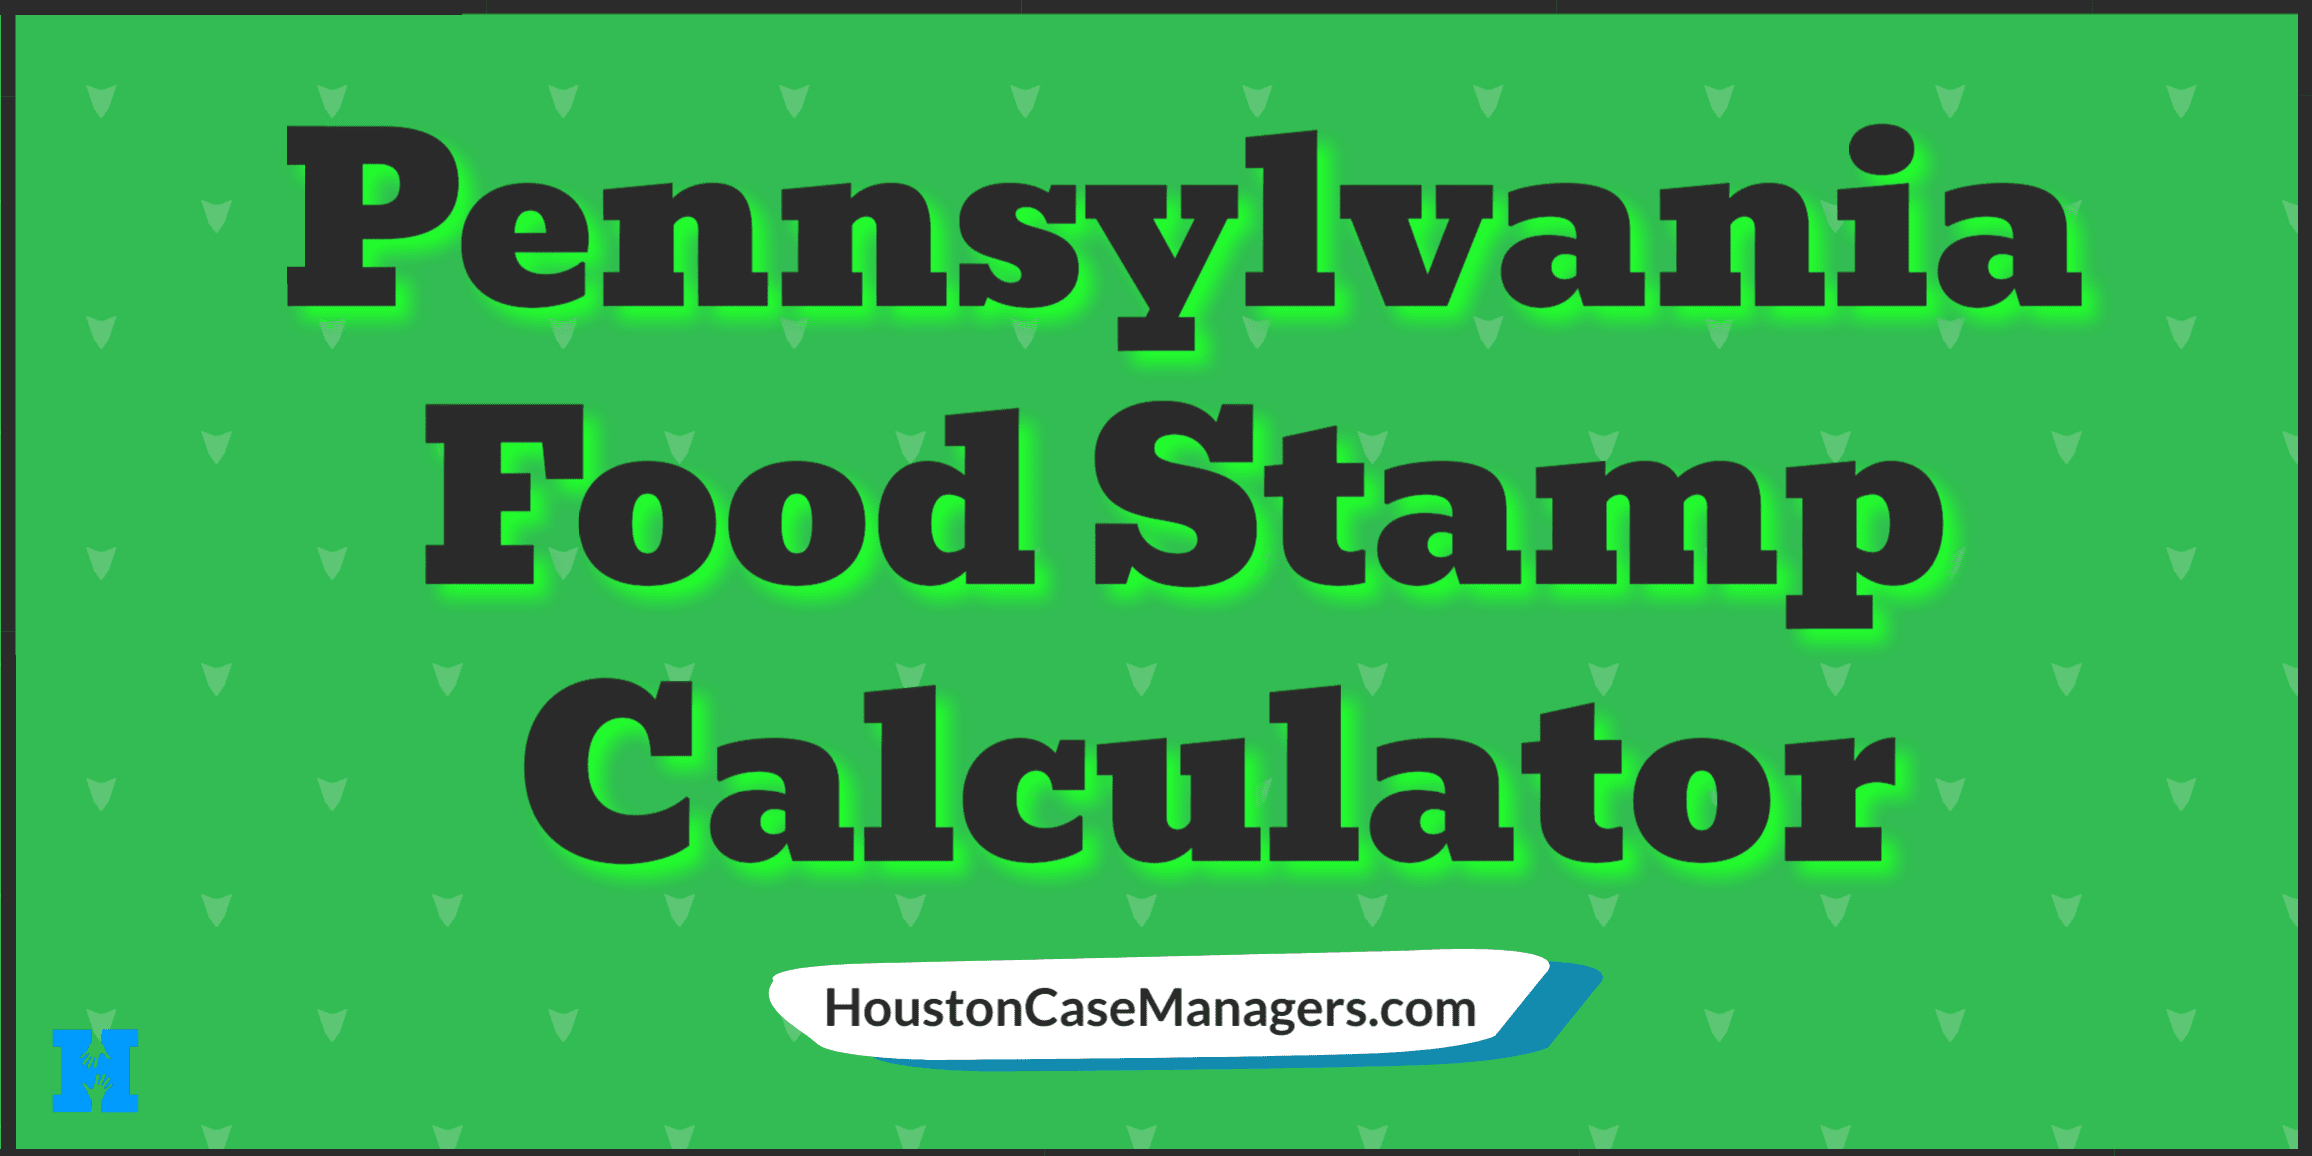 Pennsylvania food stamp calculator